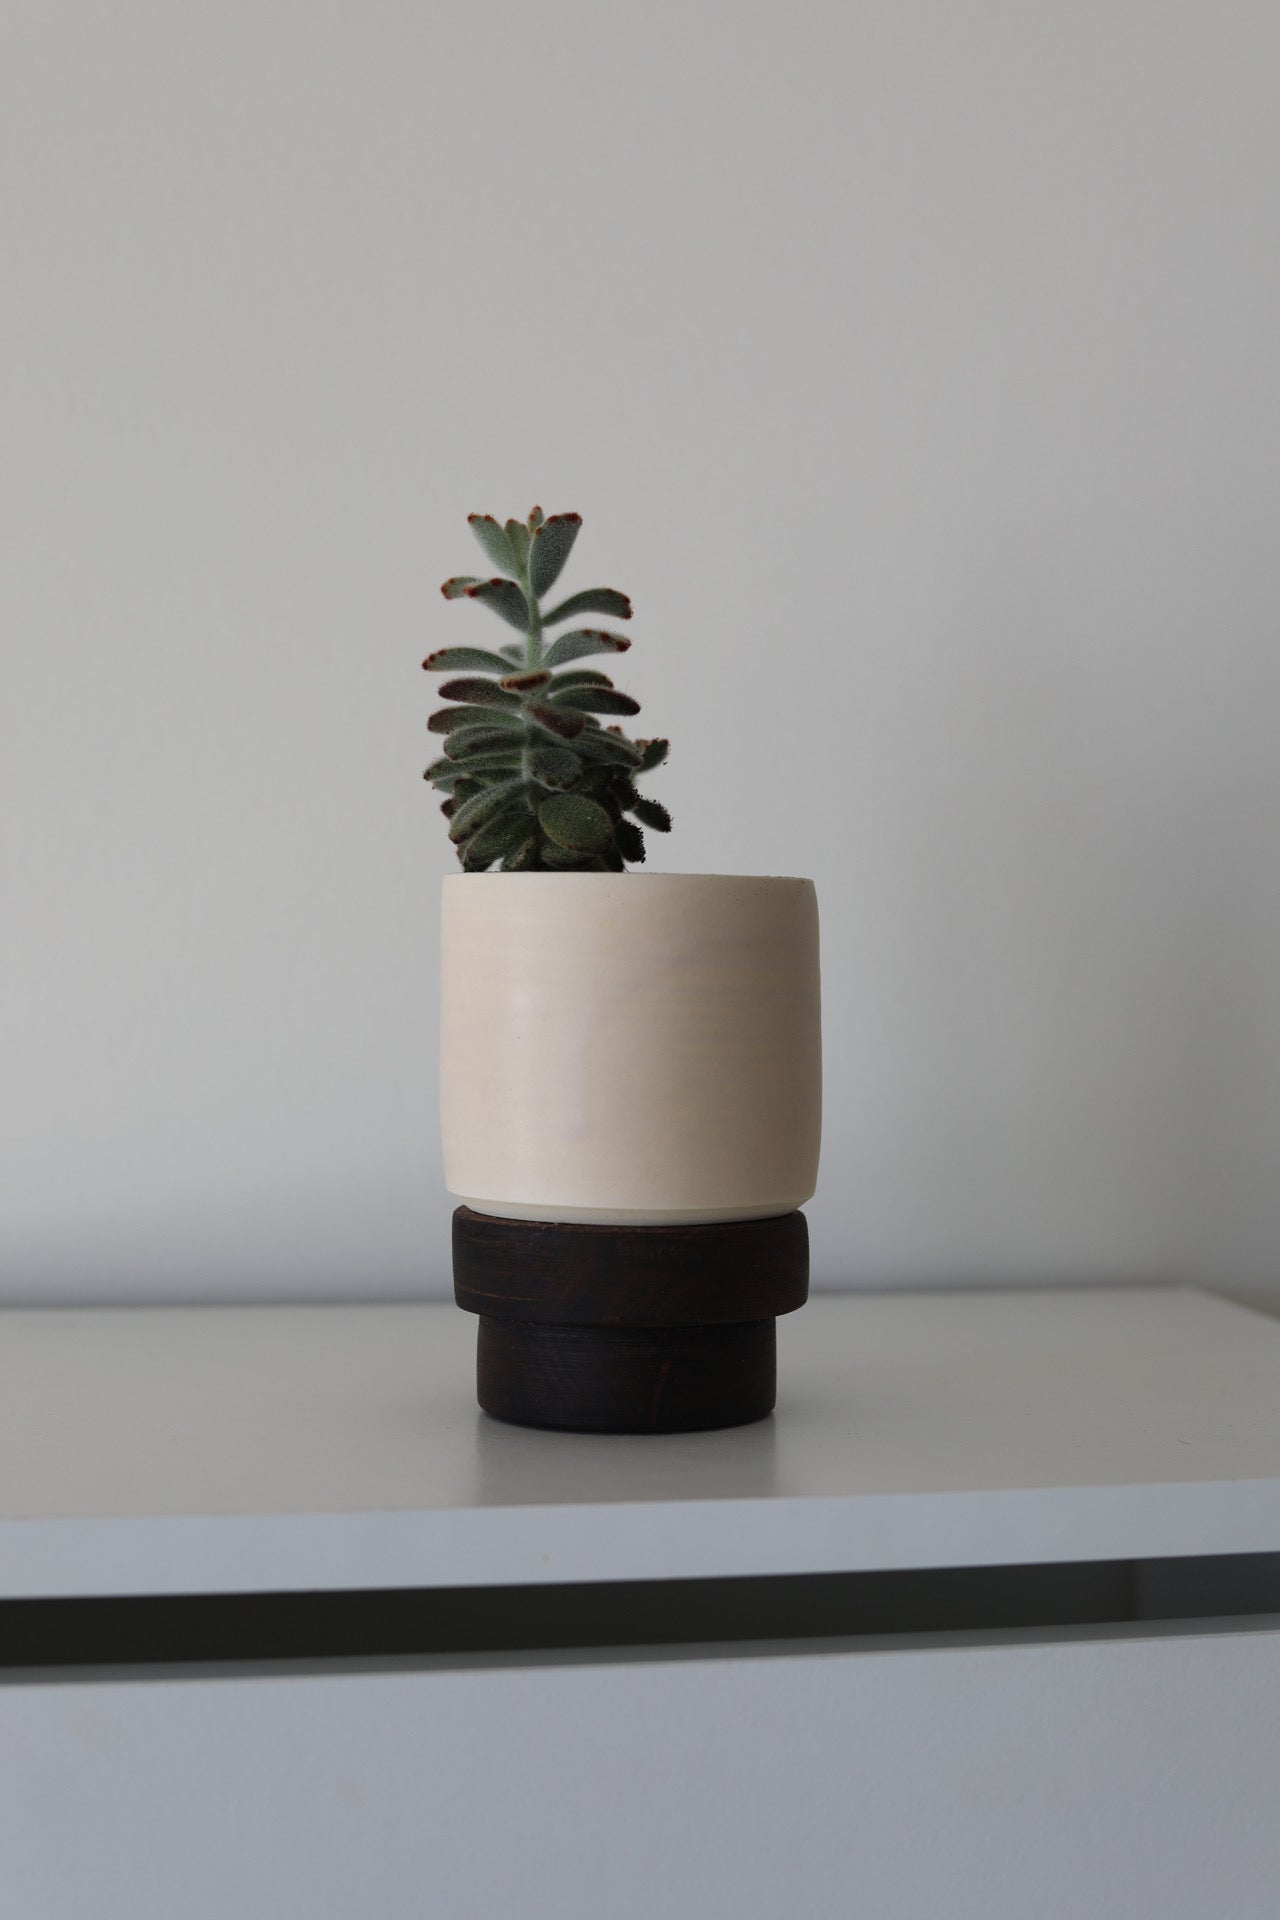 Pepo Ceramics + DREW Desk Planter - very soft pink and walnut